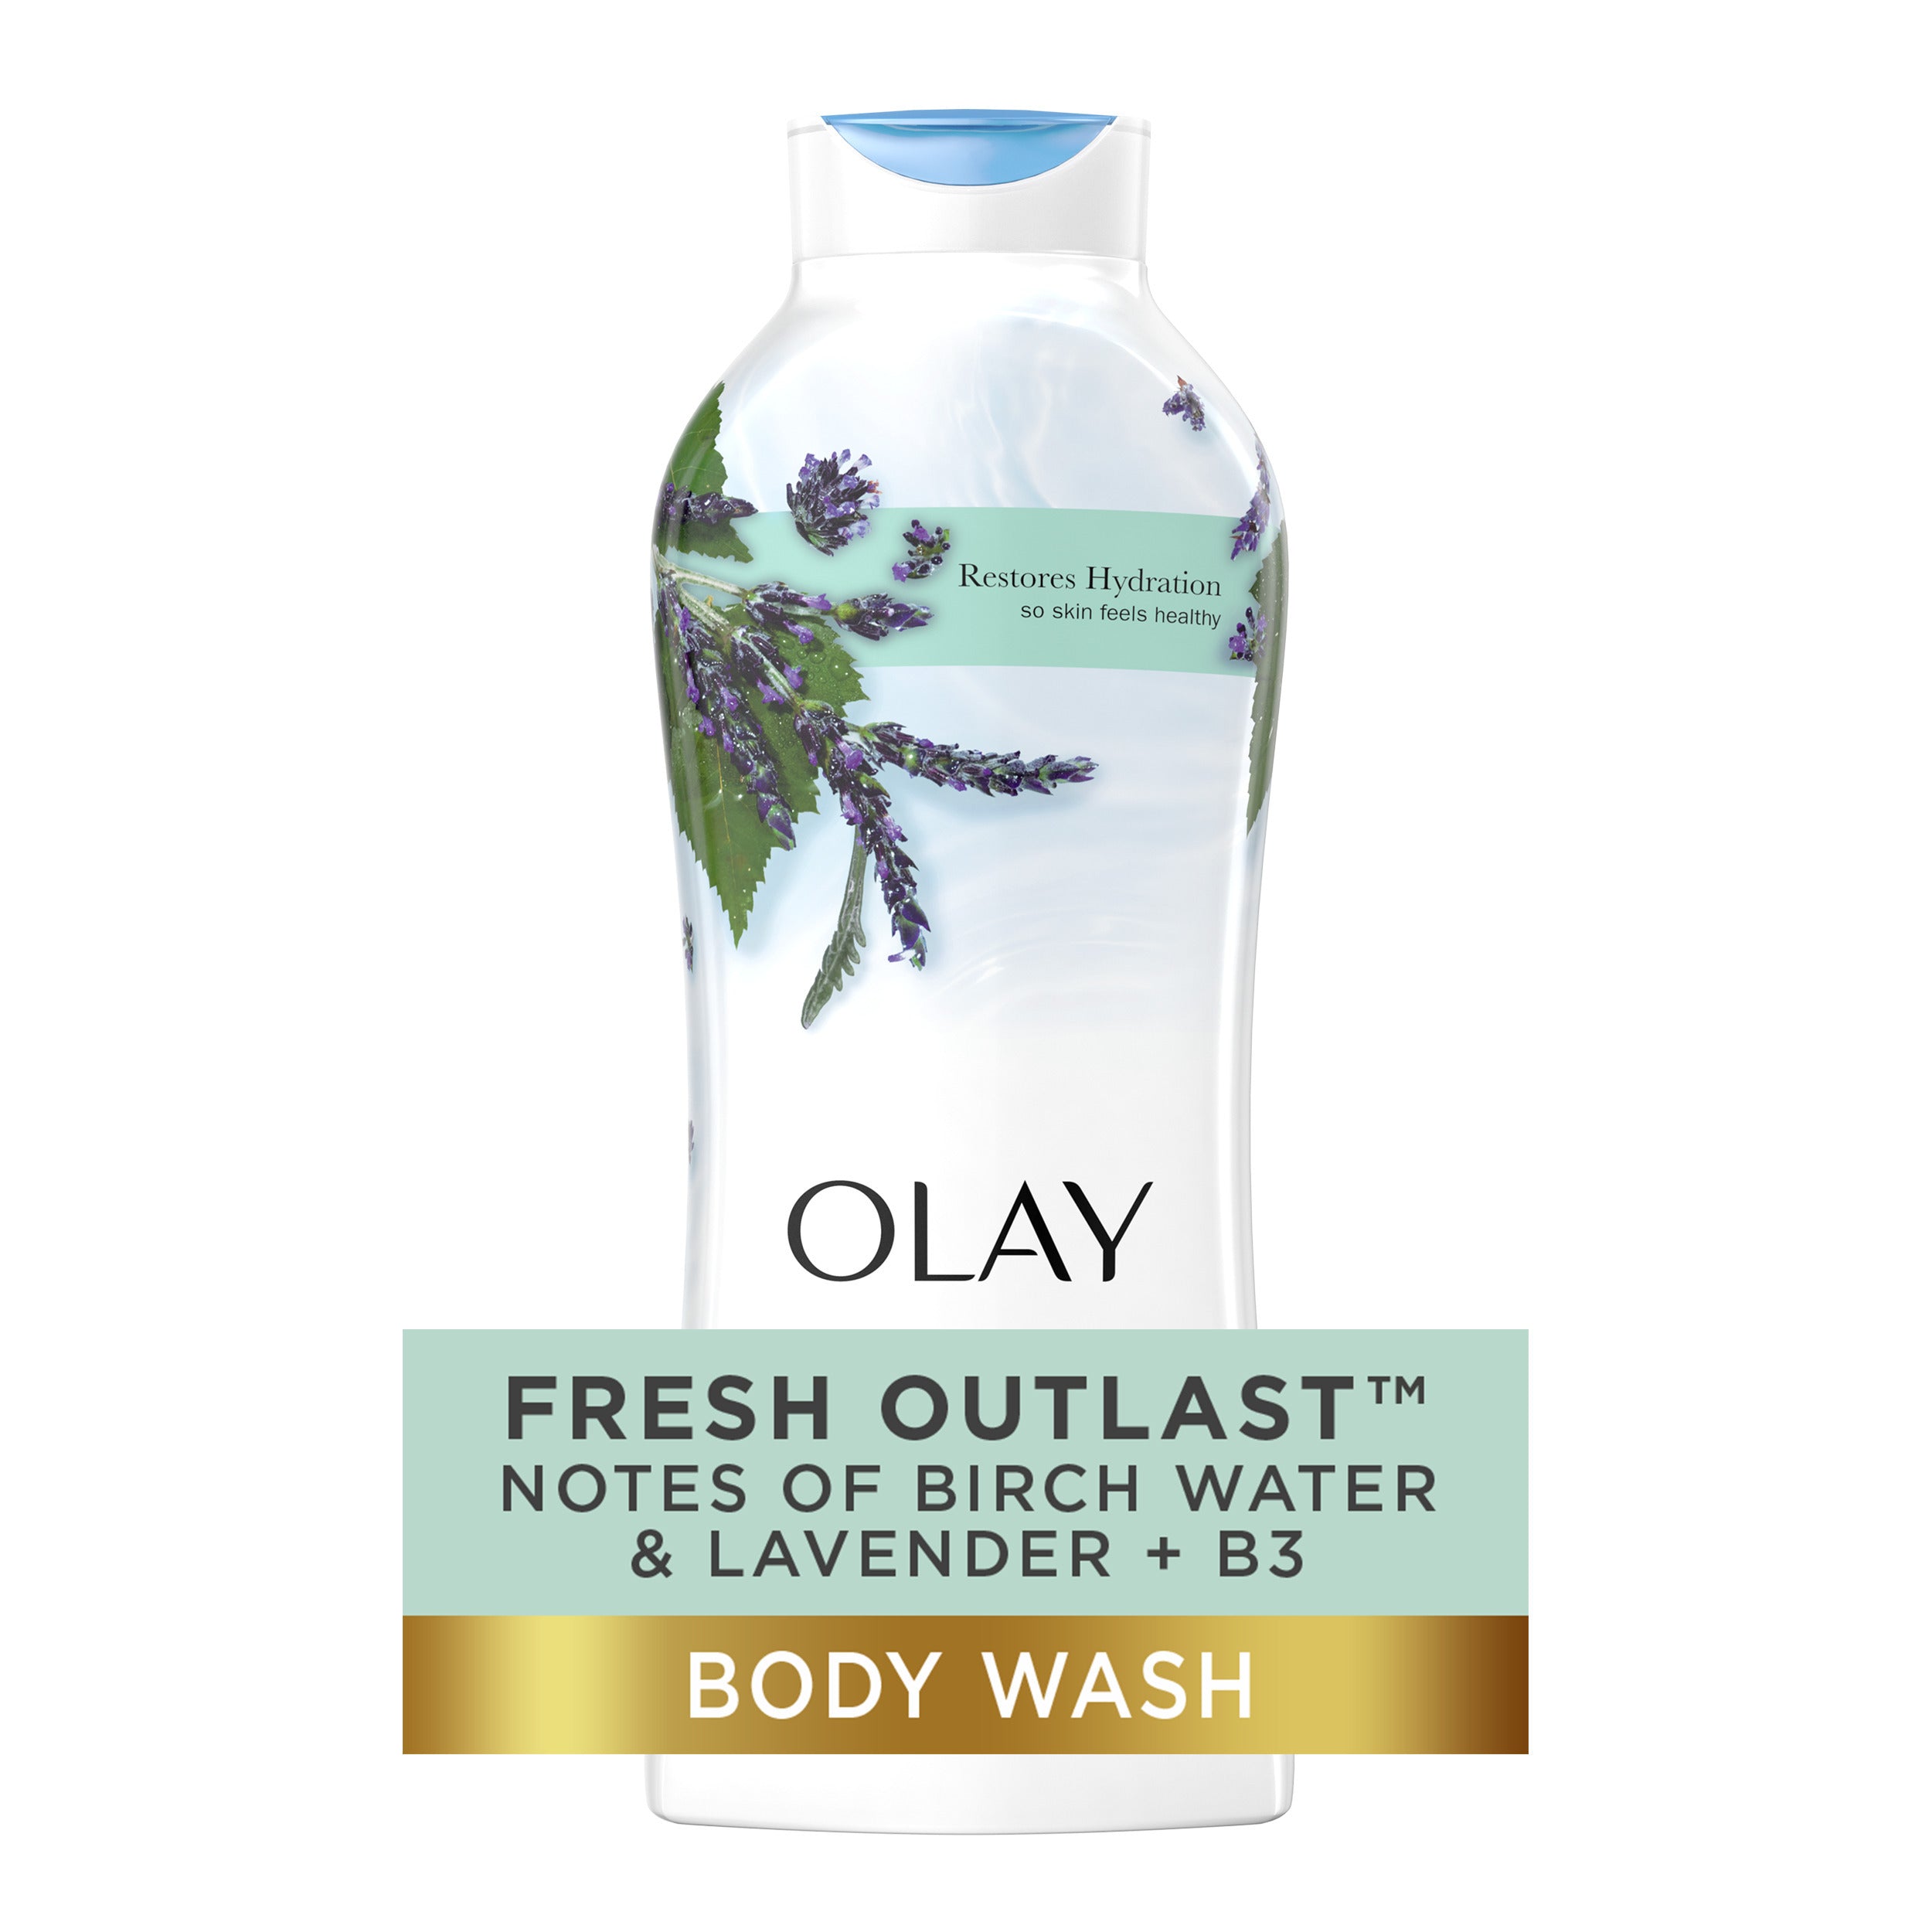 Olay Fresh Outlast Body Wash, Notes of Birch Water & Lavender, 22 fl oz | MTTS304